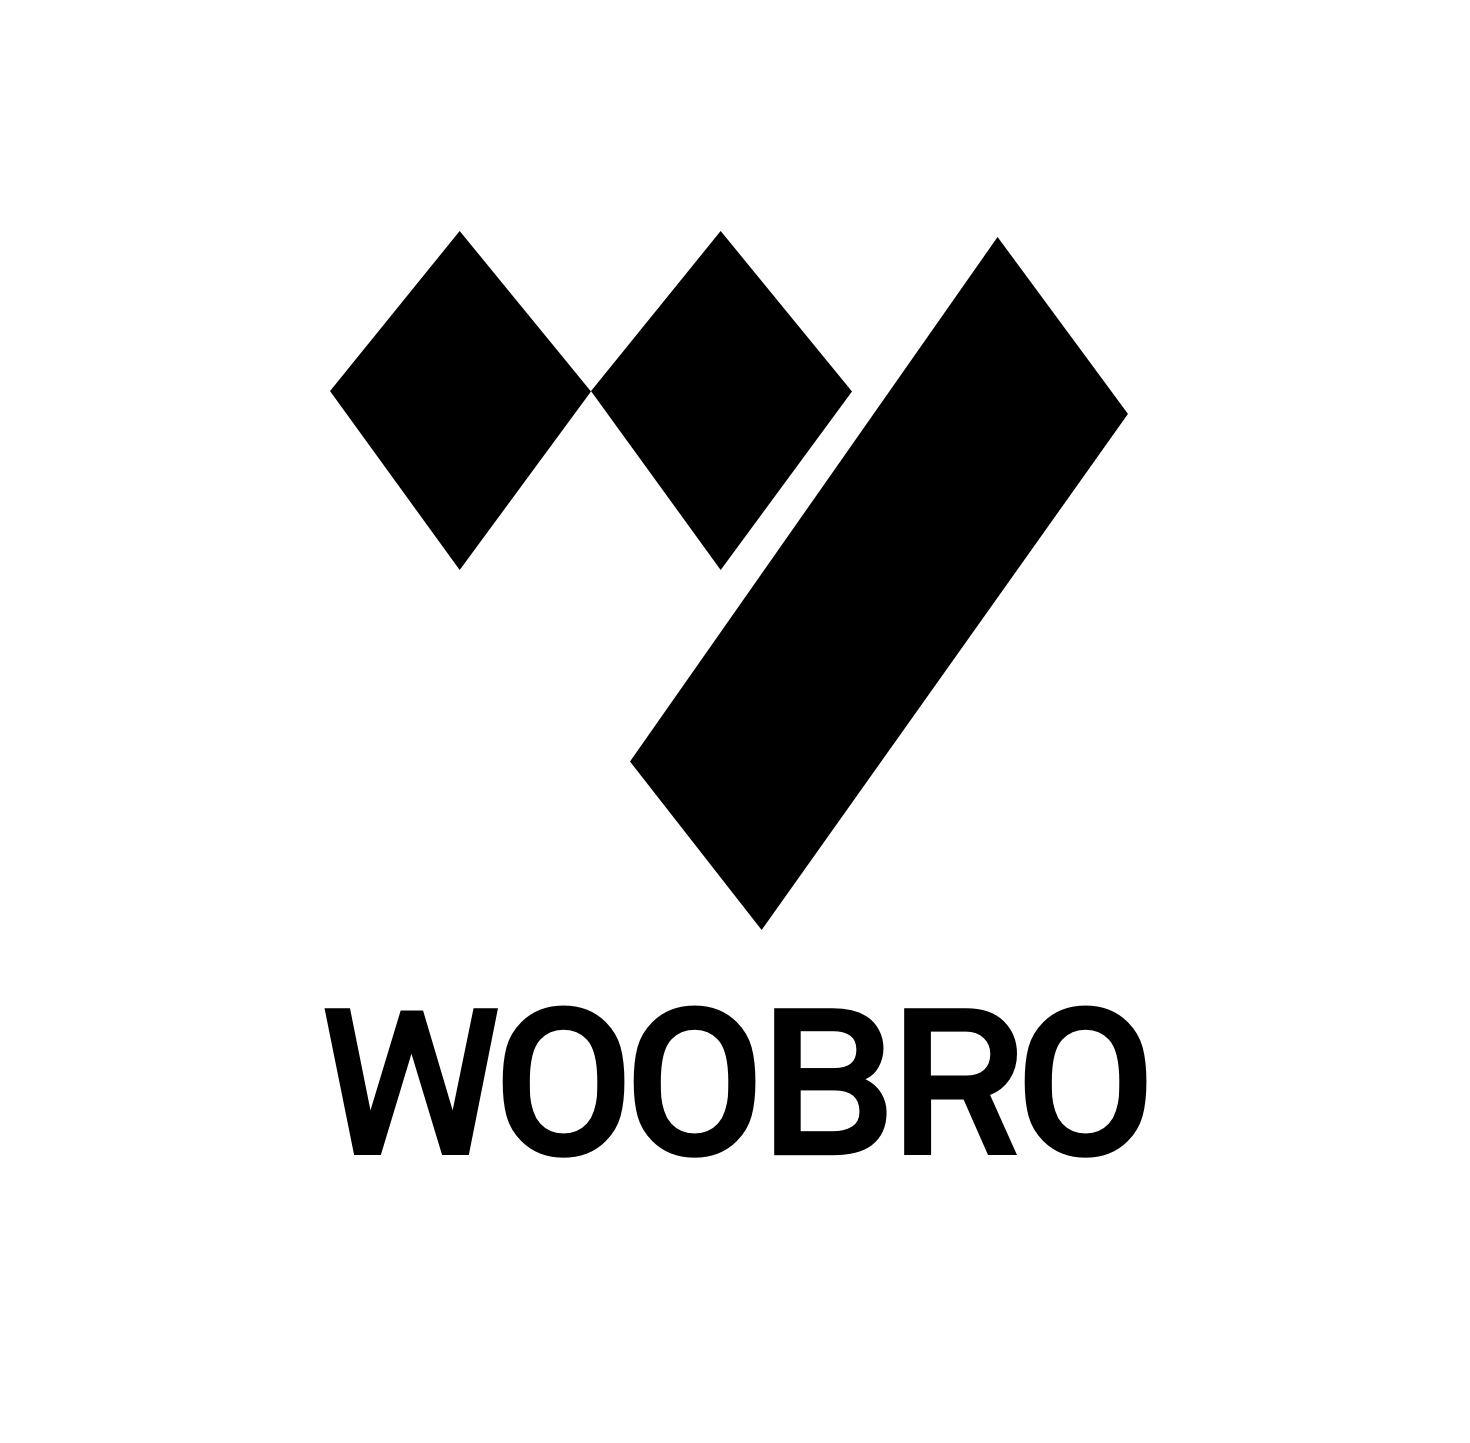 WOOBRO LTD profile on Qualified.One